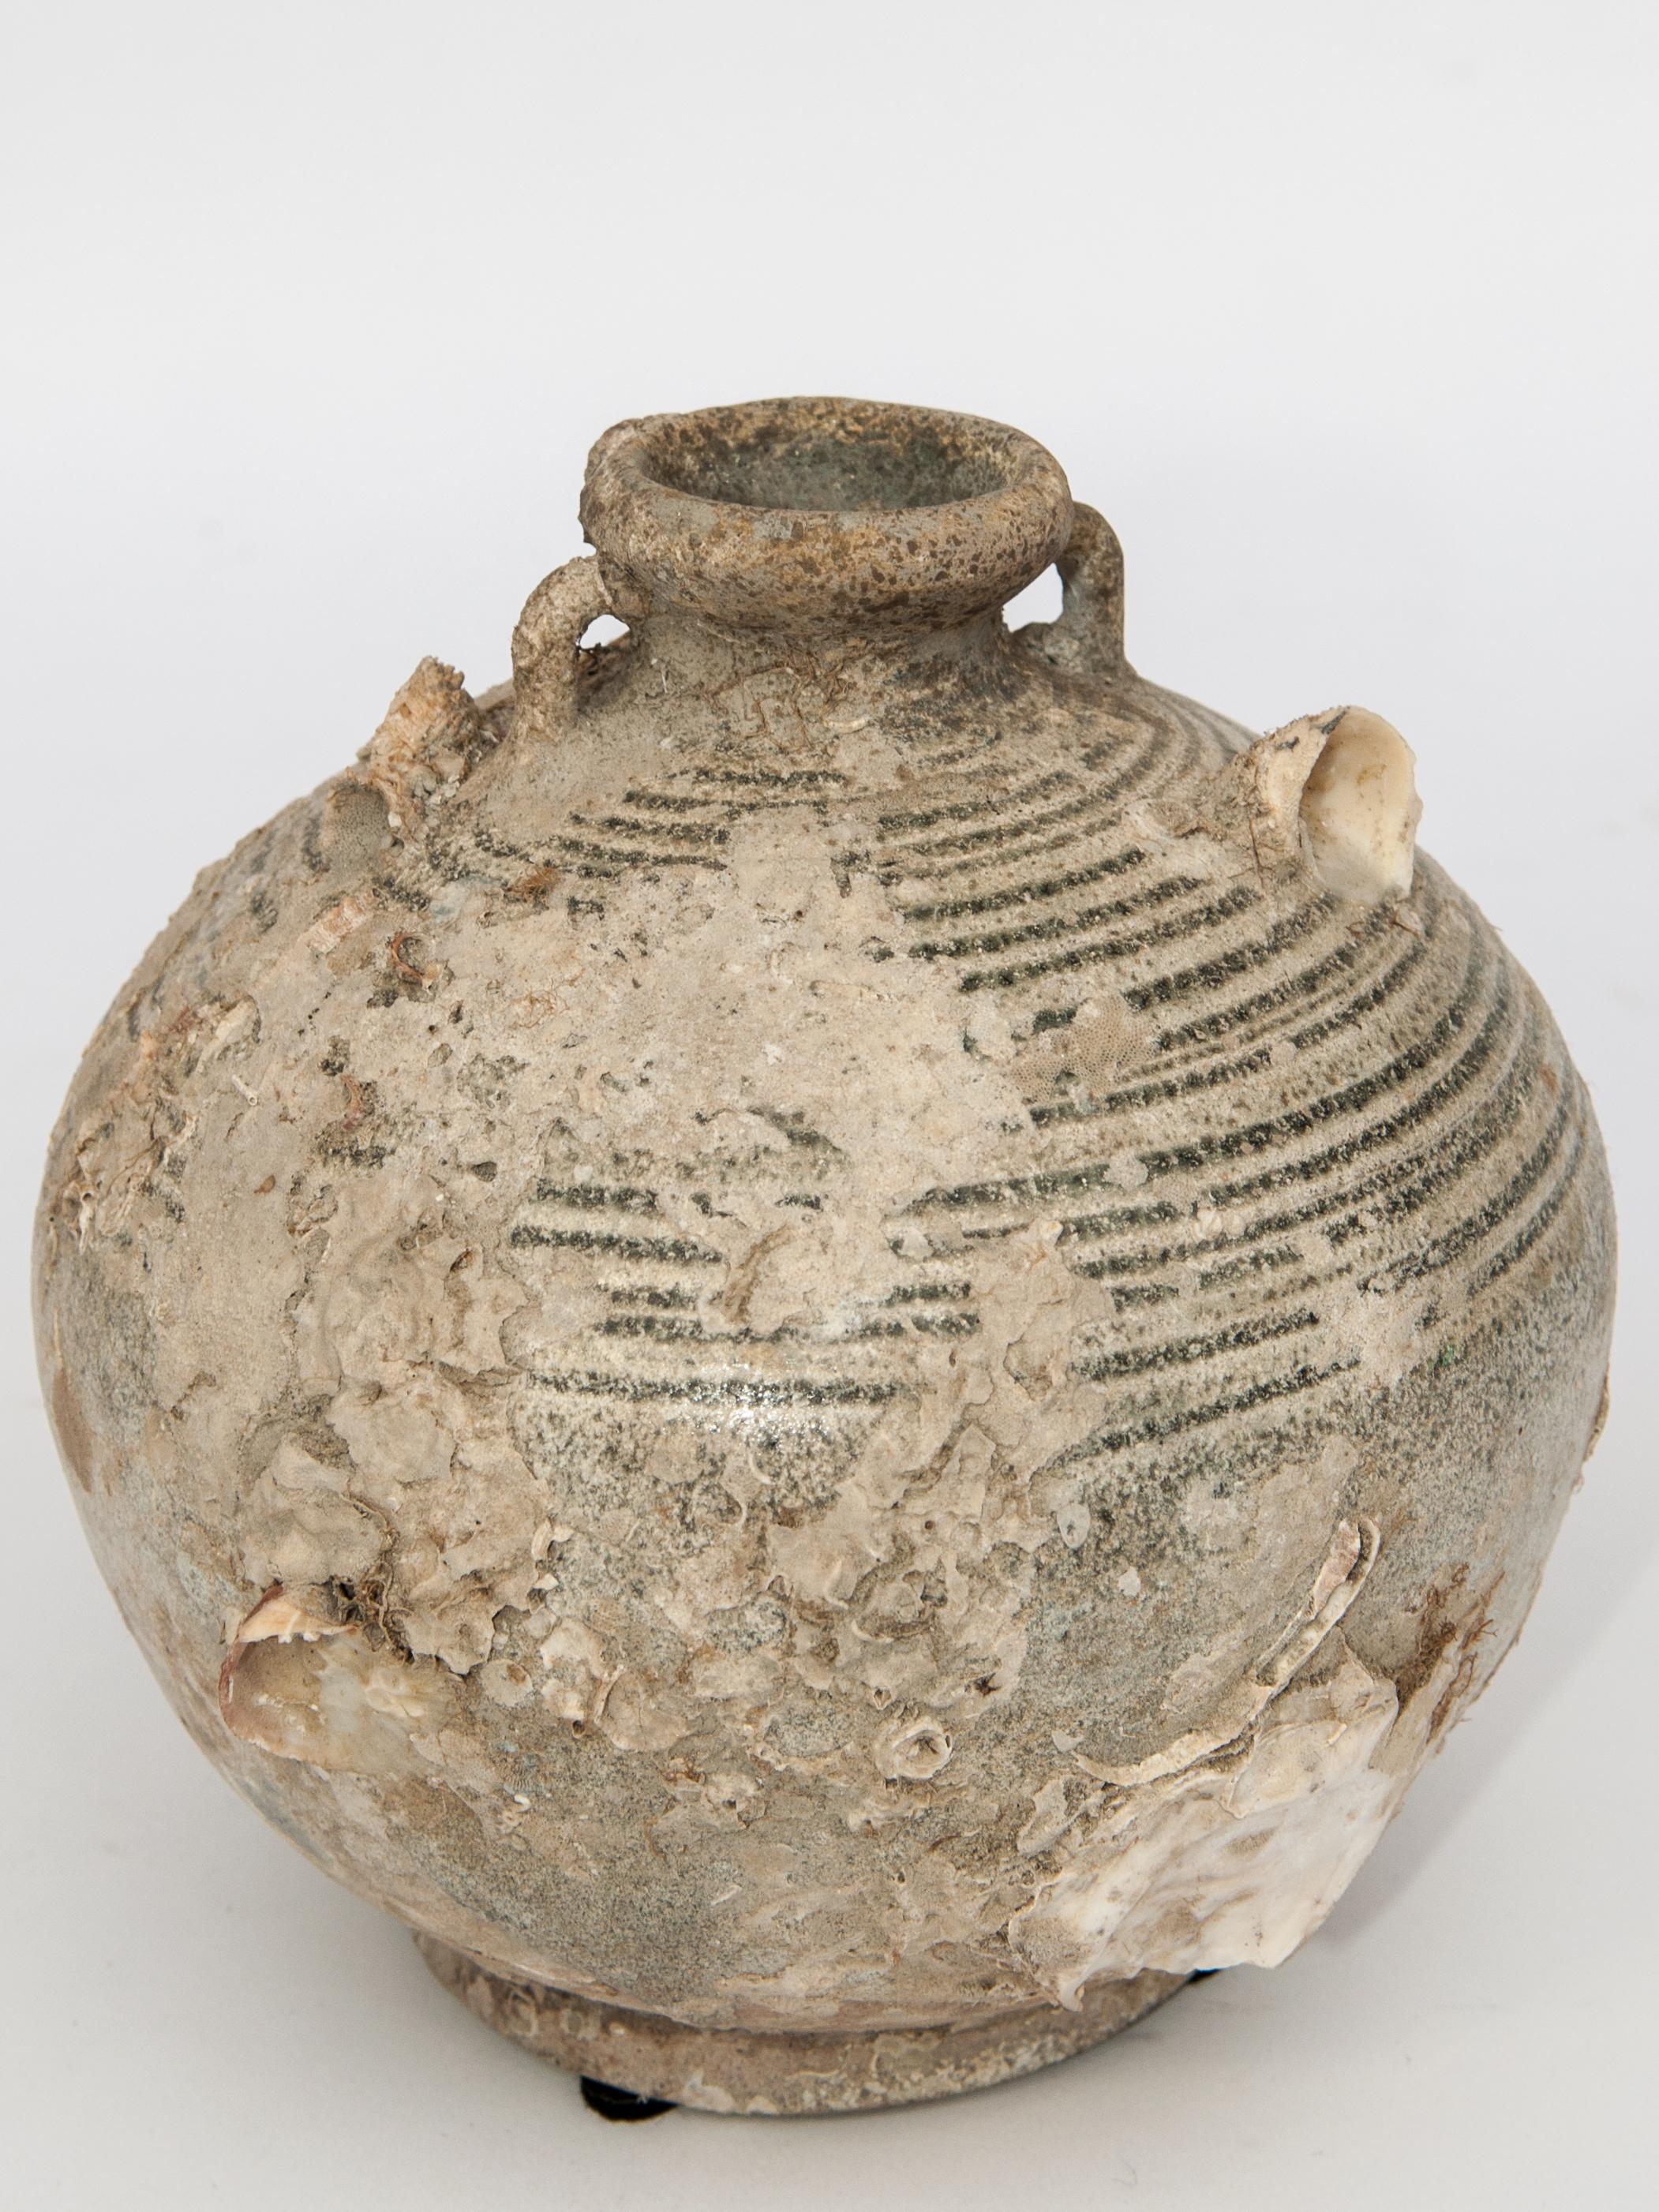 Antique Round Sawankhalok Jar with Encrustations. 6 inches tall. Sawankhalok, Thailand, 15th century.
This jar originates from the kilns of central Thailand centered around the area of Si Sachanalai dating to the Sukhothai period. Sawankhalok